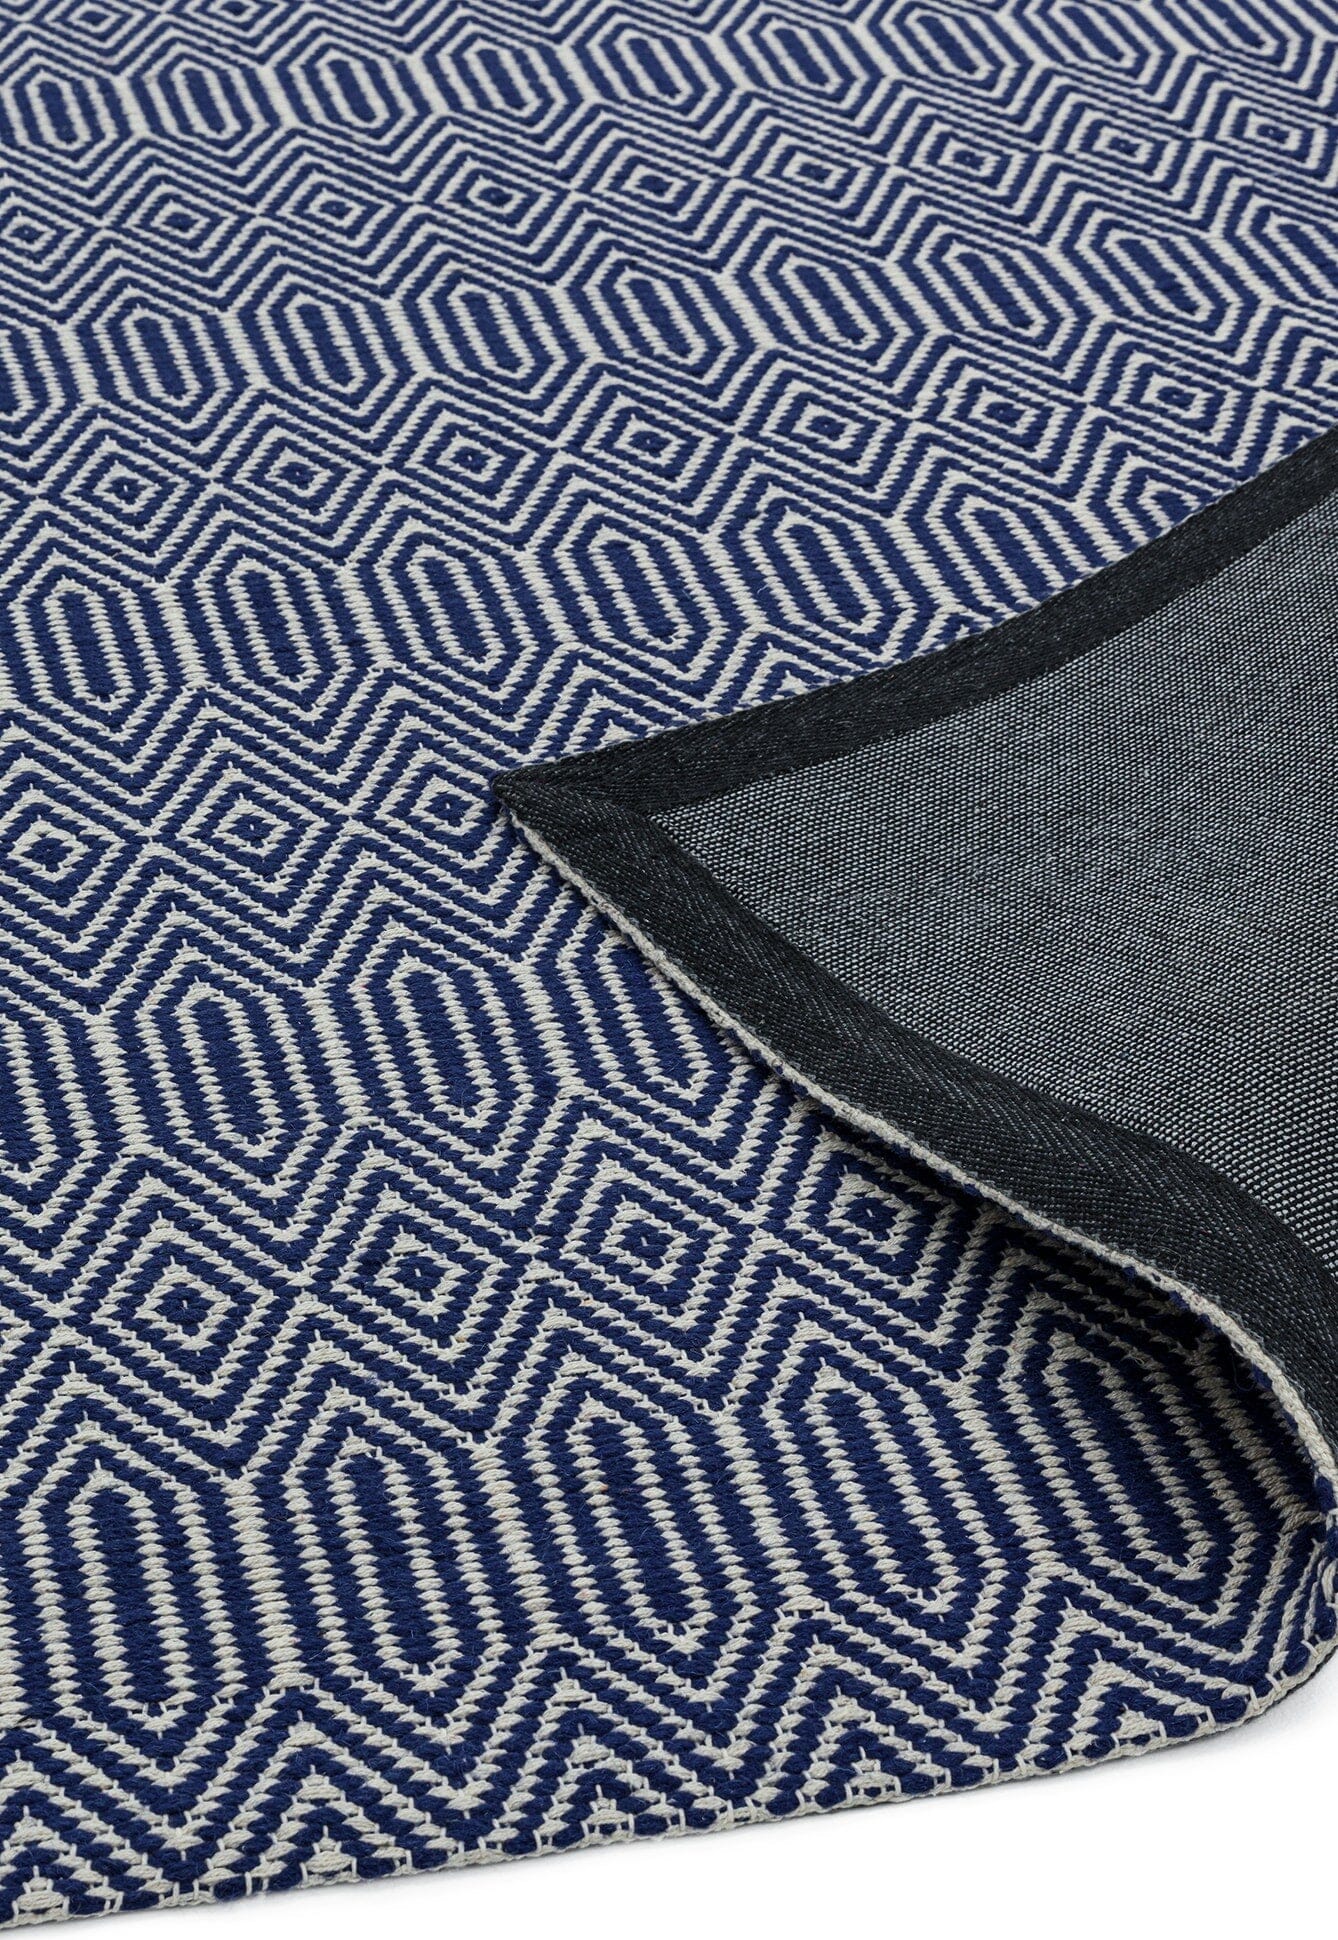 Asiatic Carpets Sloan Hand Woven Runner Blue - 66 x 200cm